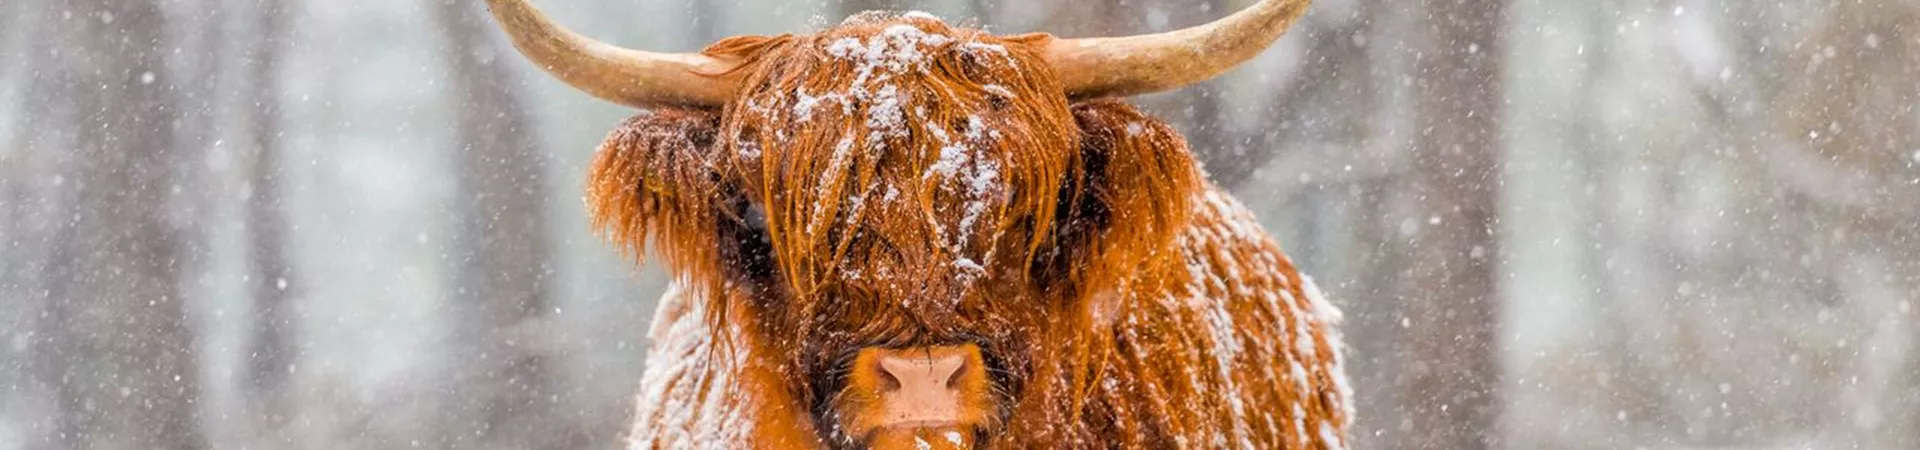 Scottish highland cow in snow